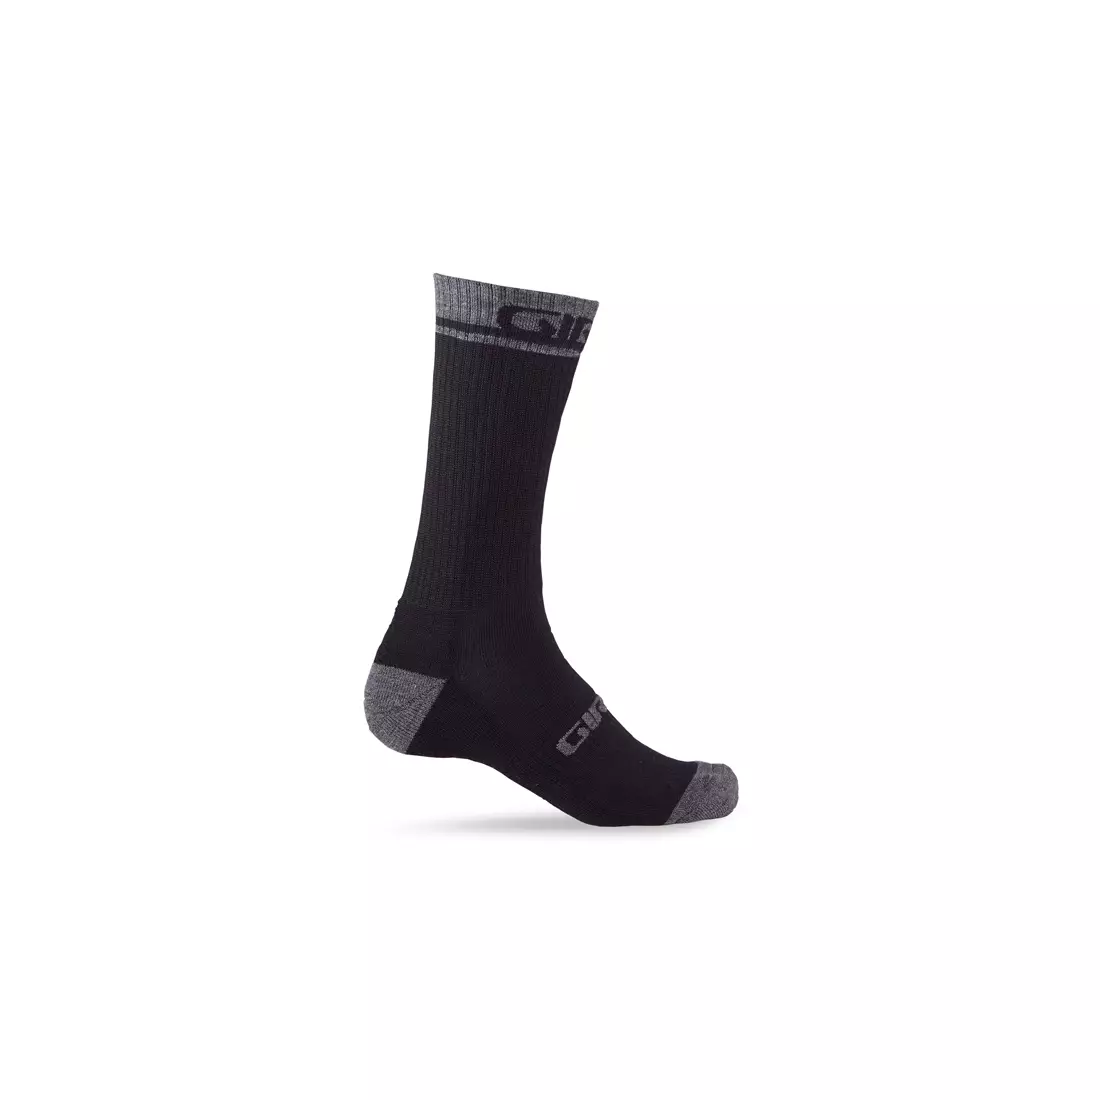 GIRO cycling socks winter merino wool black dark shadow GR-7077554